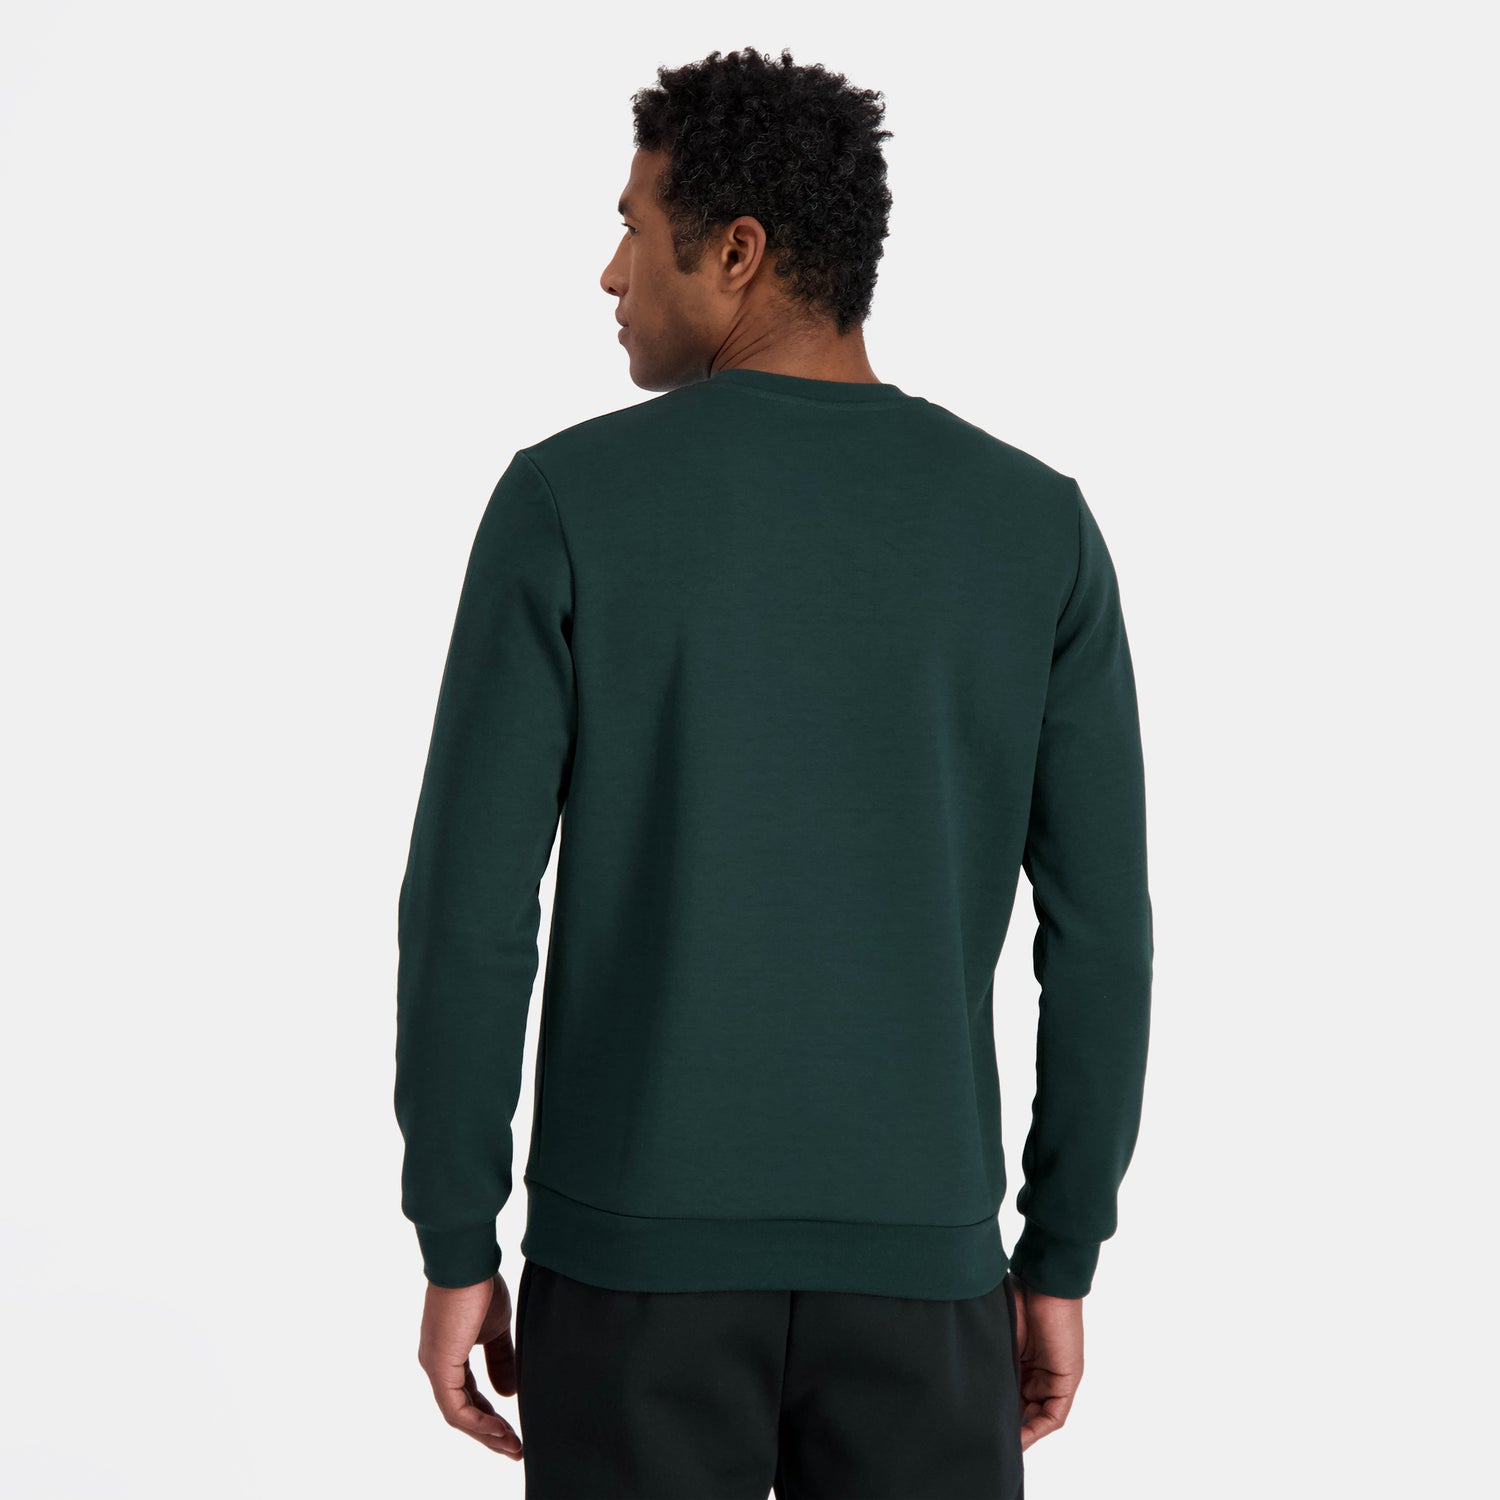 2411179-LA PAIX Crew Sweat N°1 M scarab  | Round-Neck Sweatshirtshirt motif «La Paix» for men